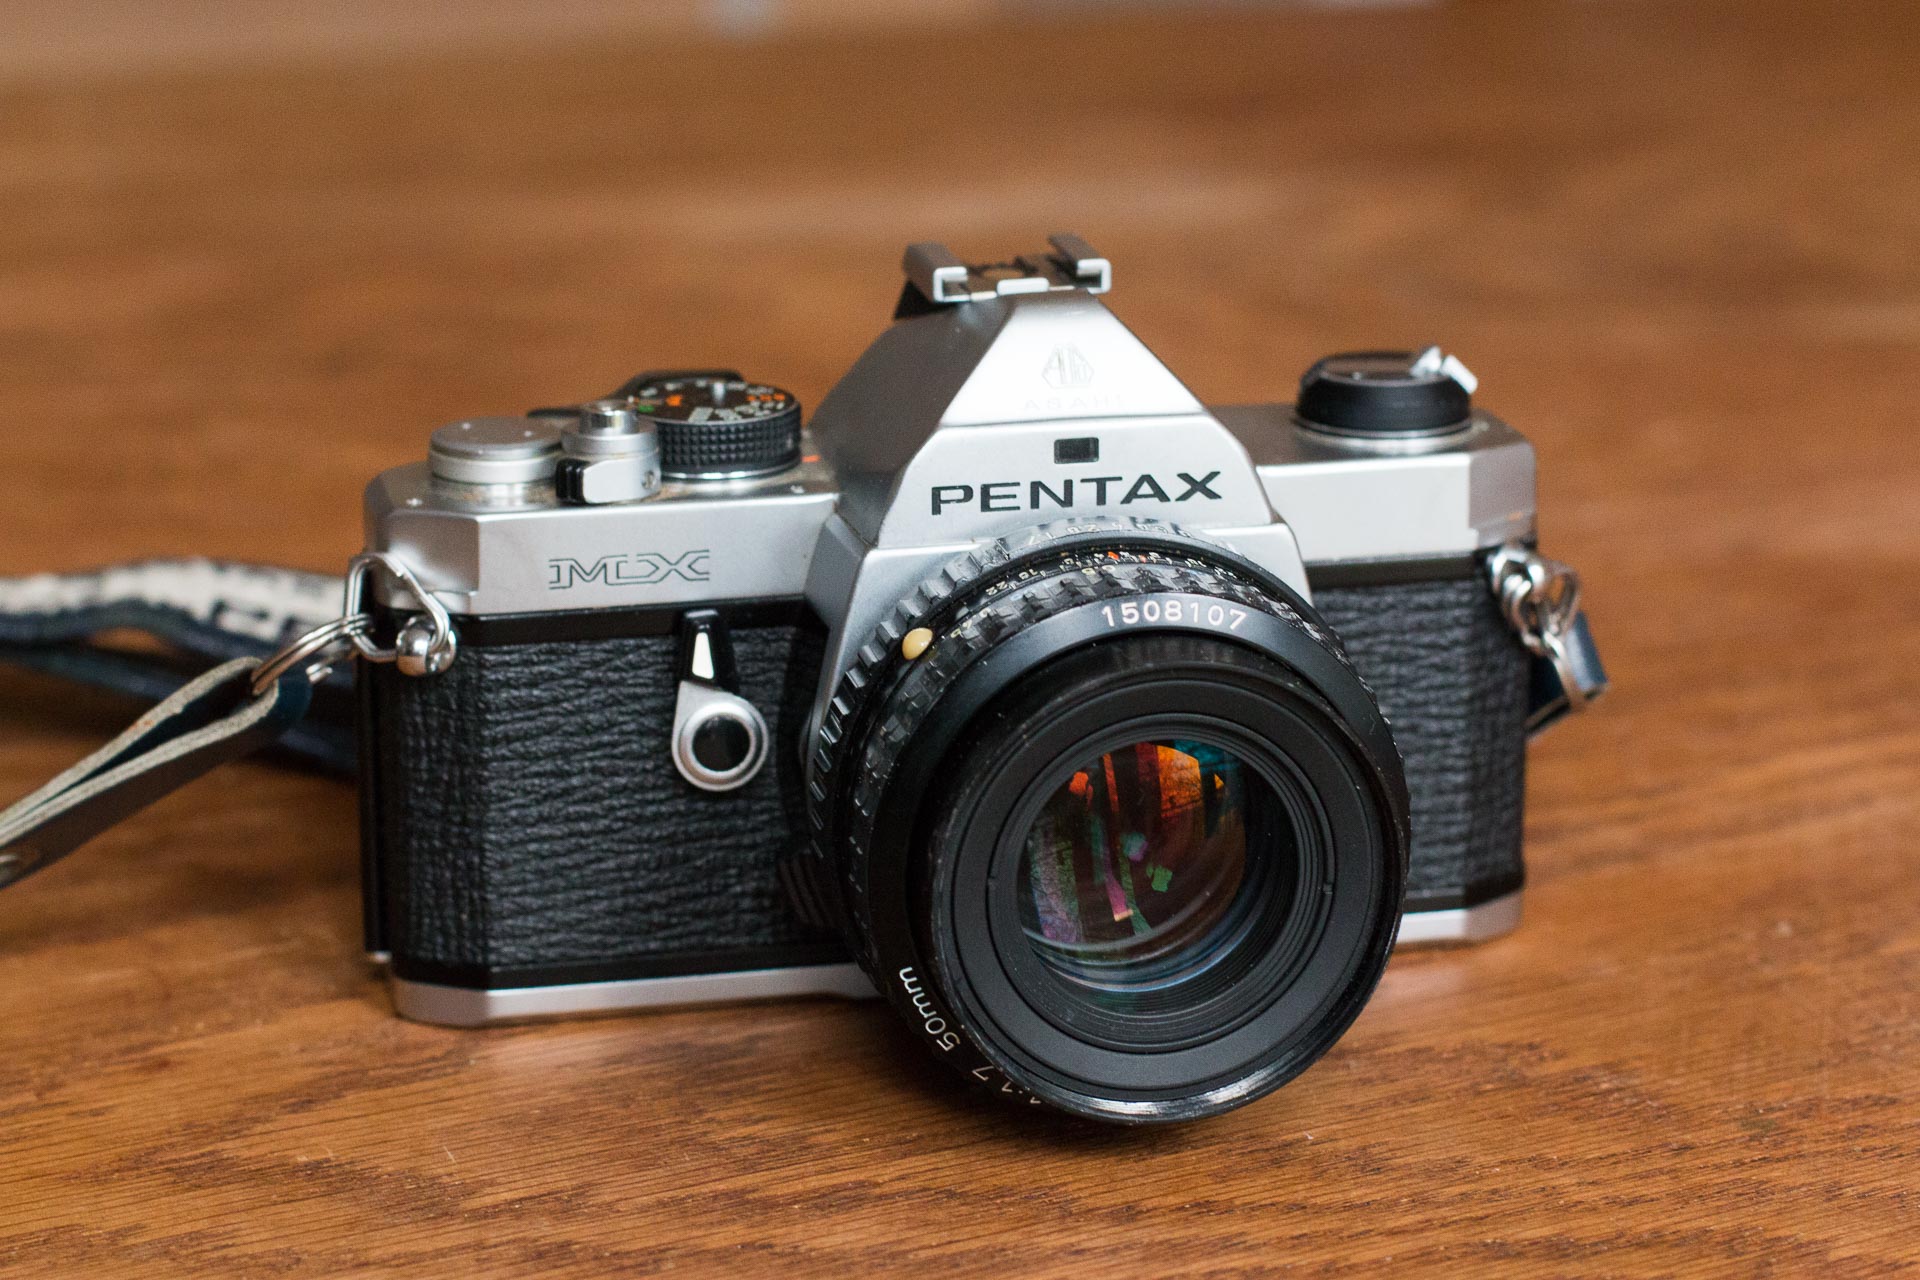 Excellent appareil photo reflex 35 mm Pentax KM avec objectif 50 mm f/1,4  du Jap